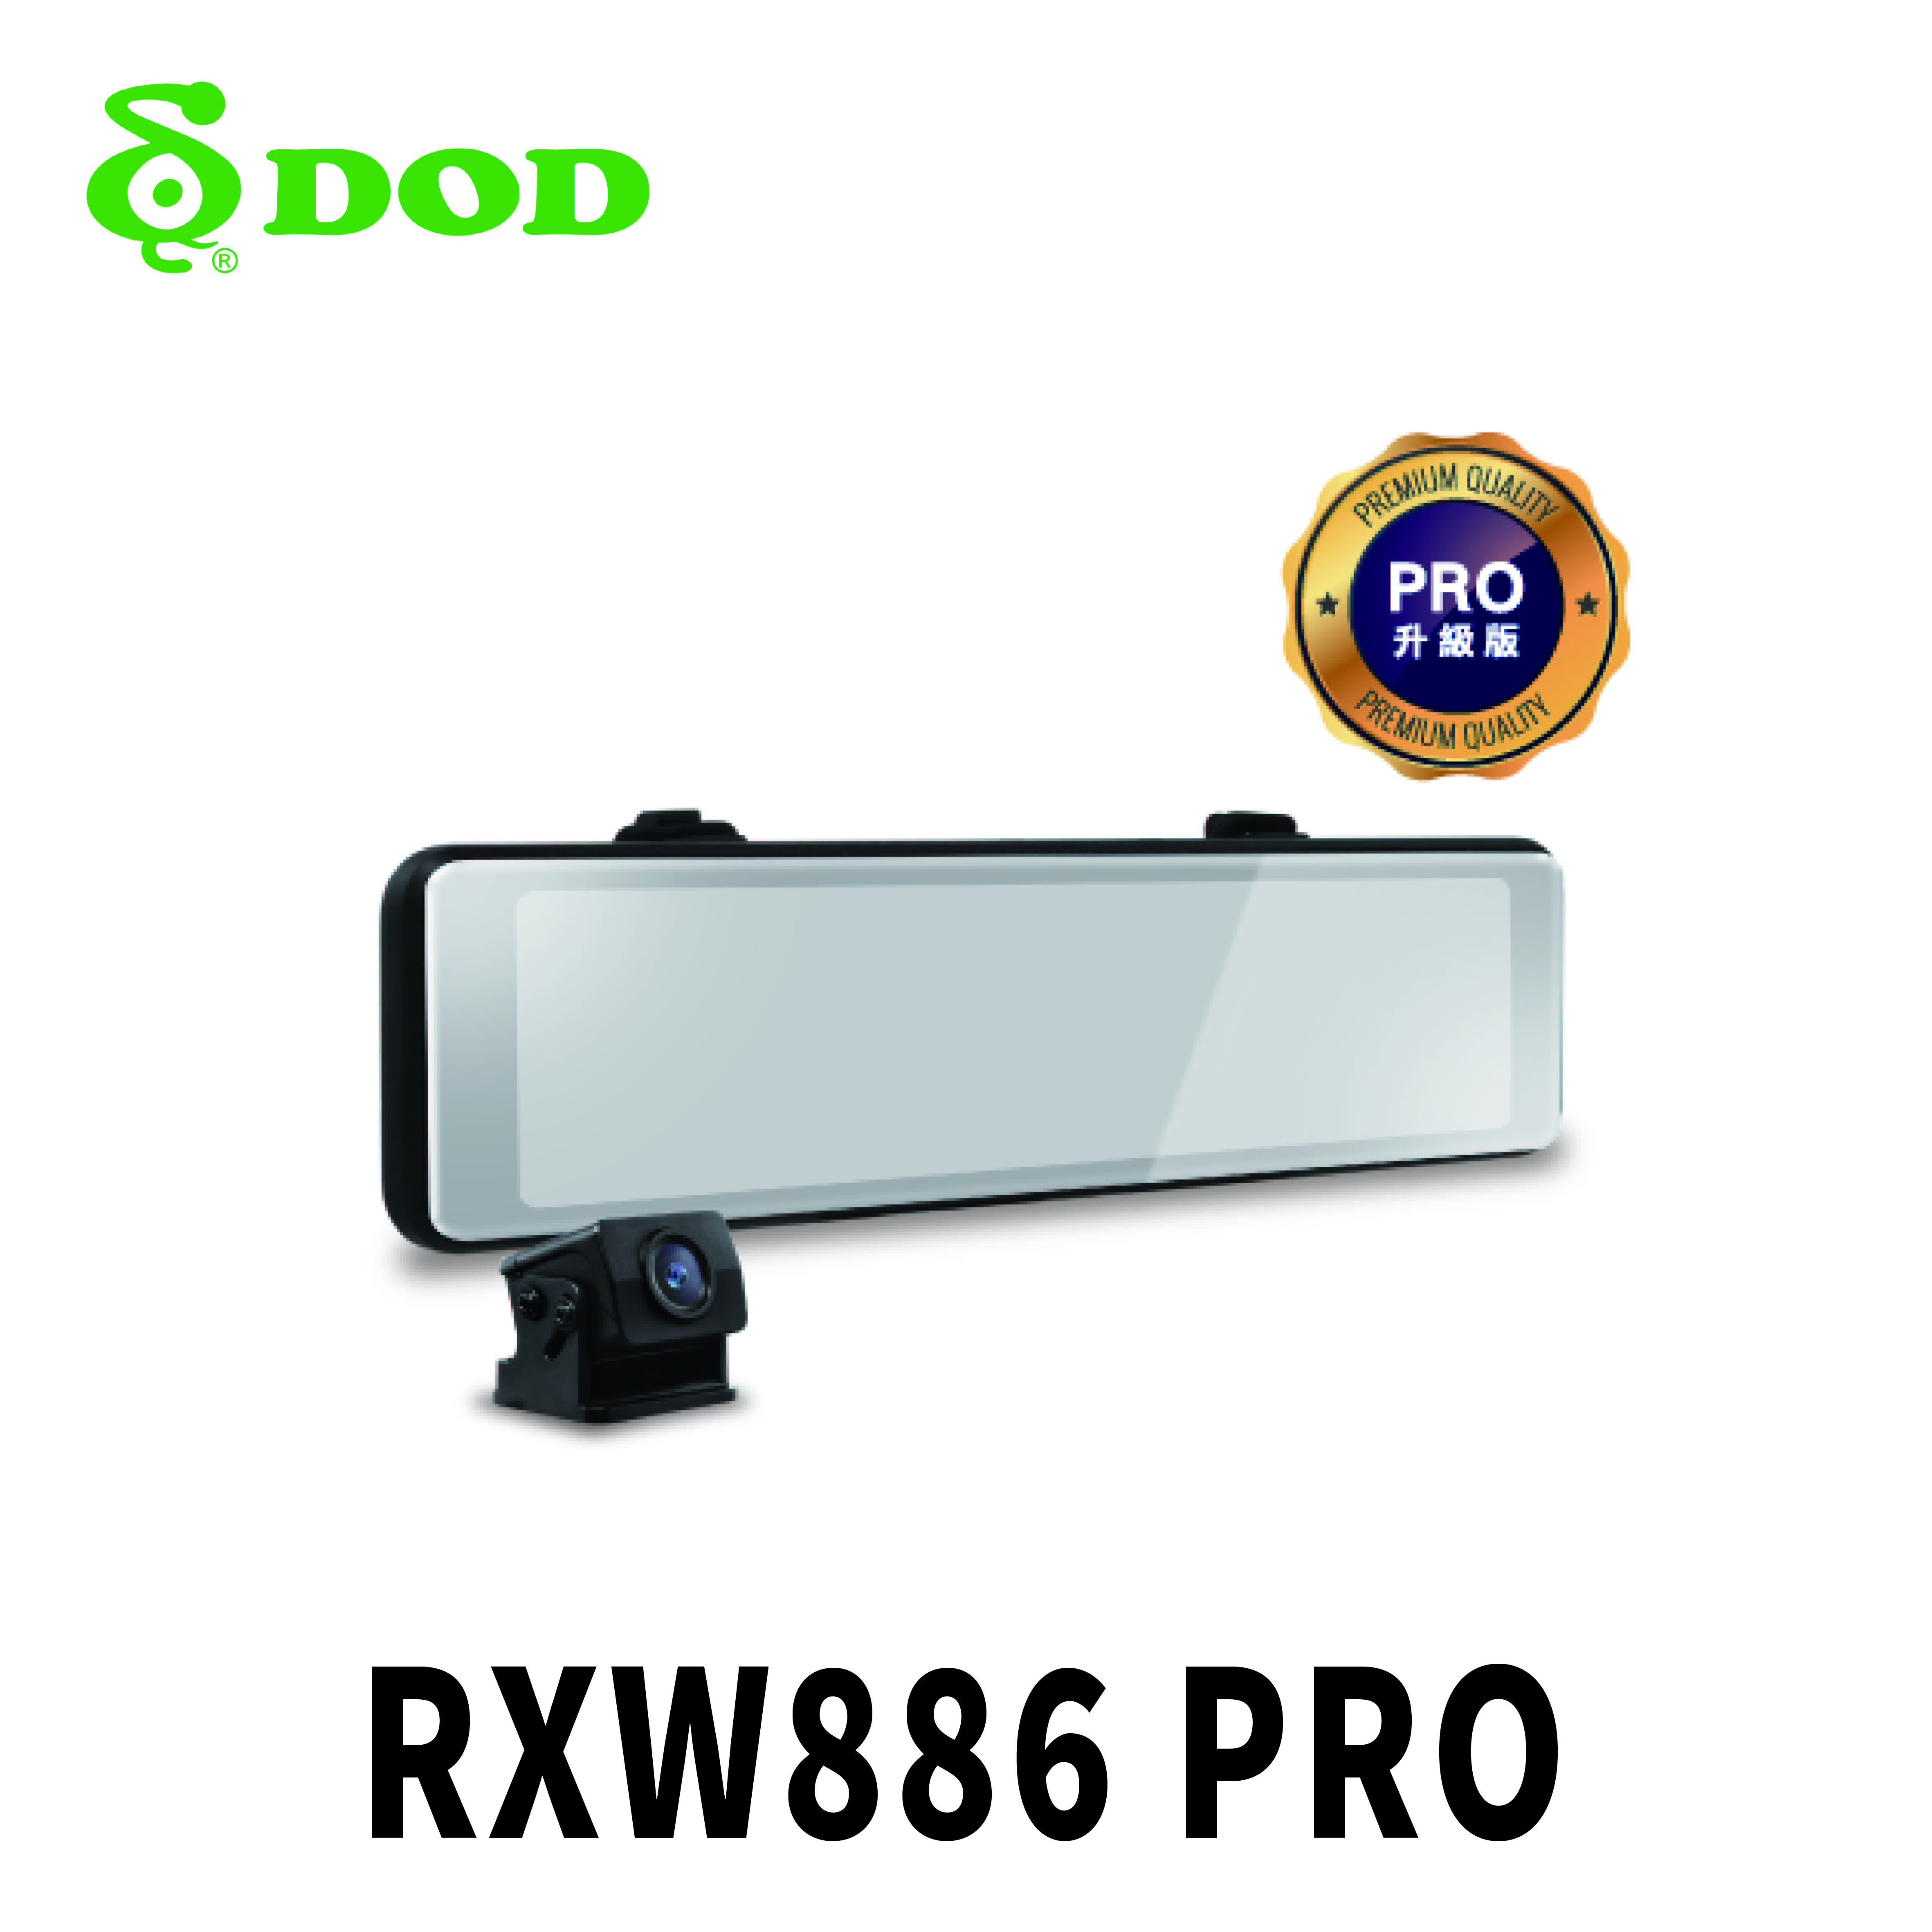 DOD RZW886 PRO 2K+1080p 觸控式 GPS 雙鏡頭行車記錄器